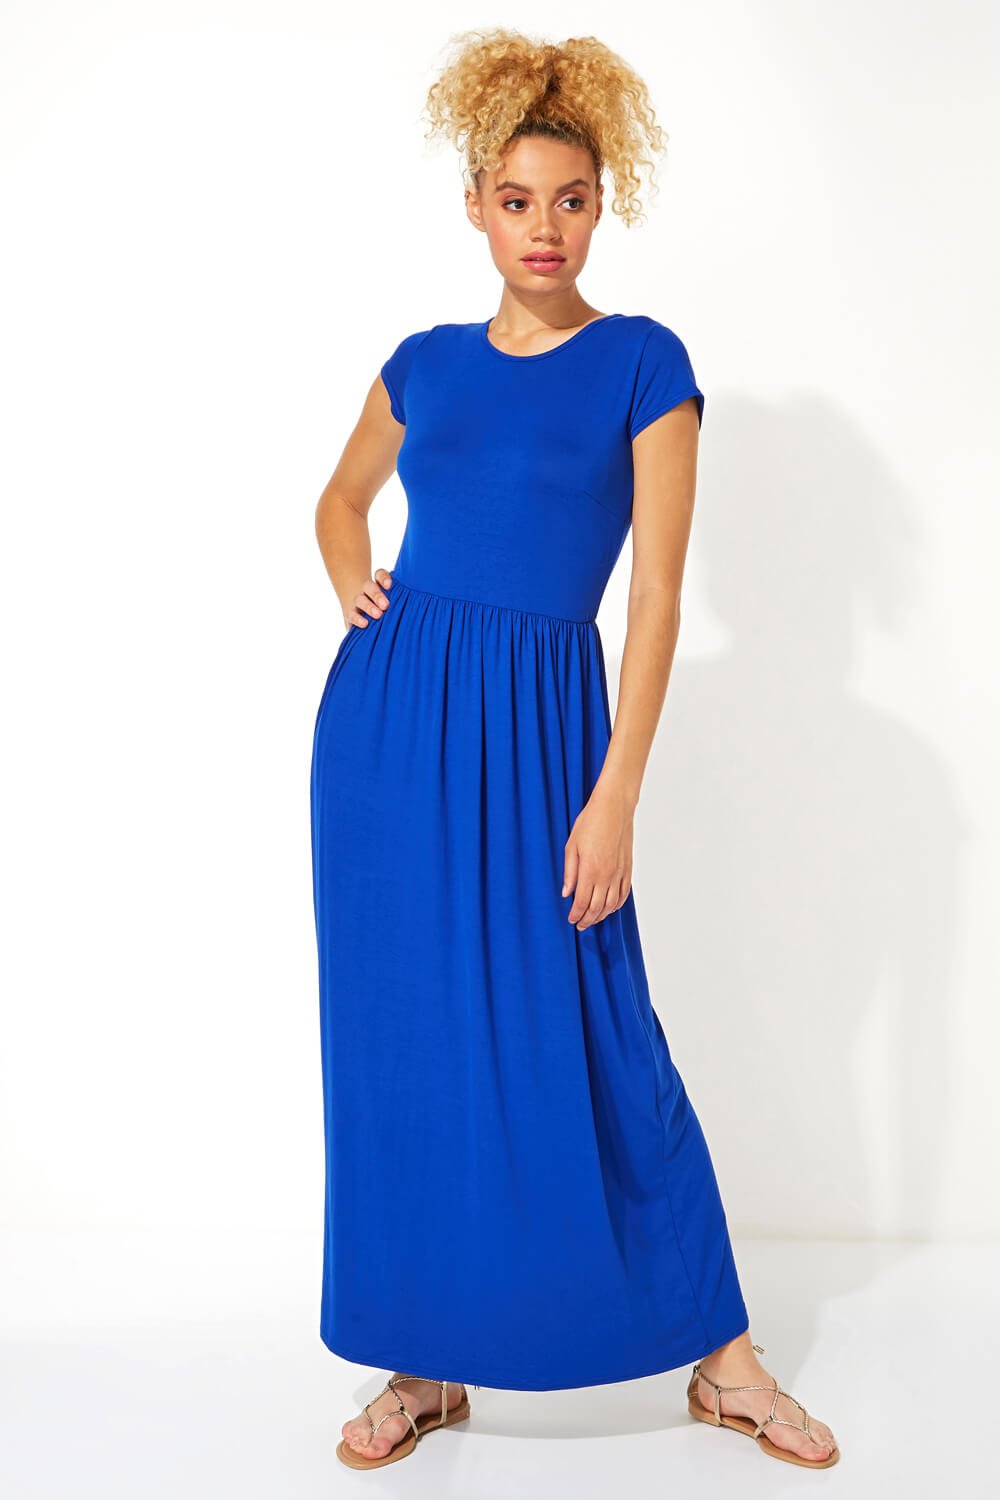 Gathered Skirt Maxi Dress in Royal Blue - Roman Originals UK